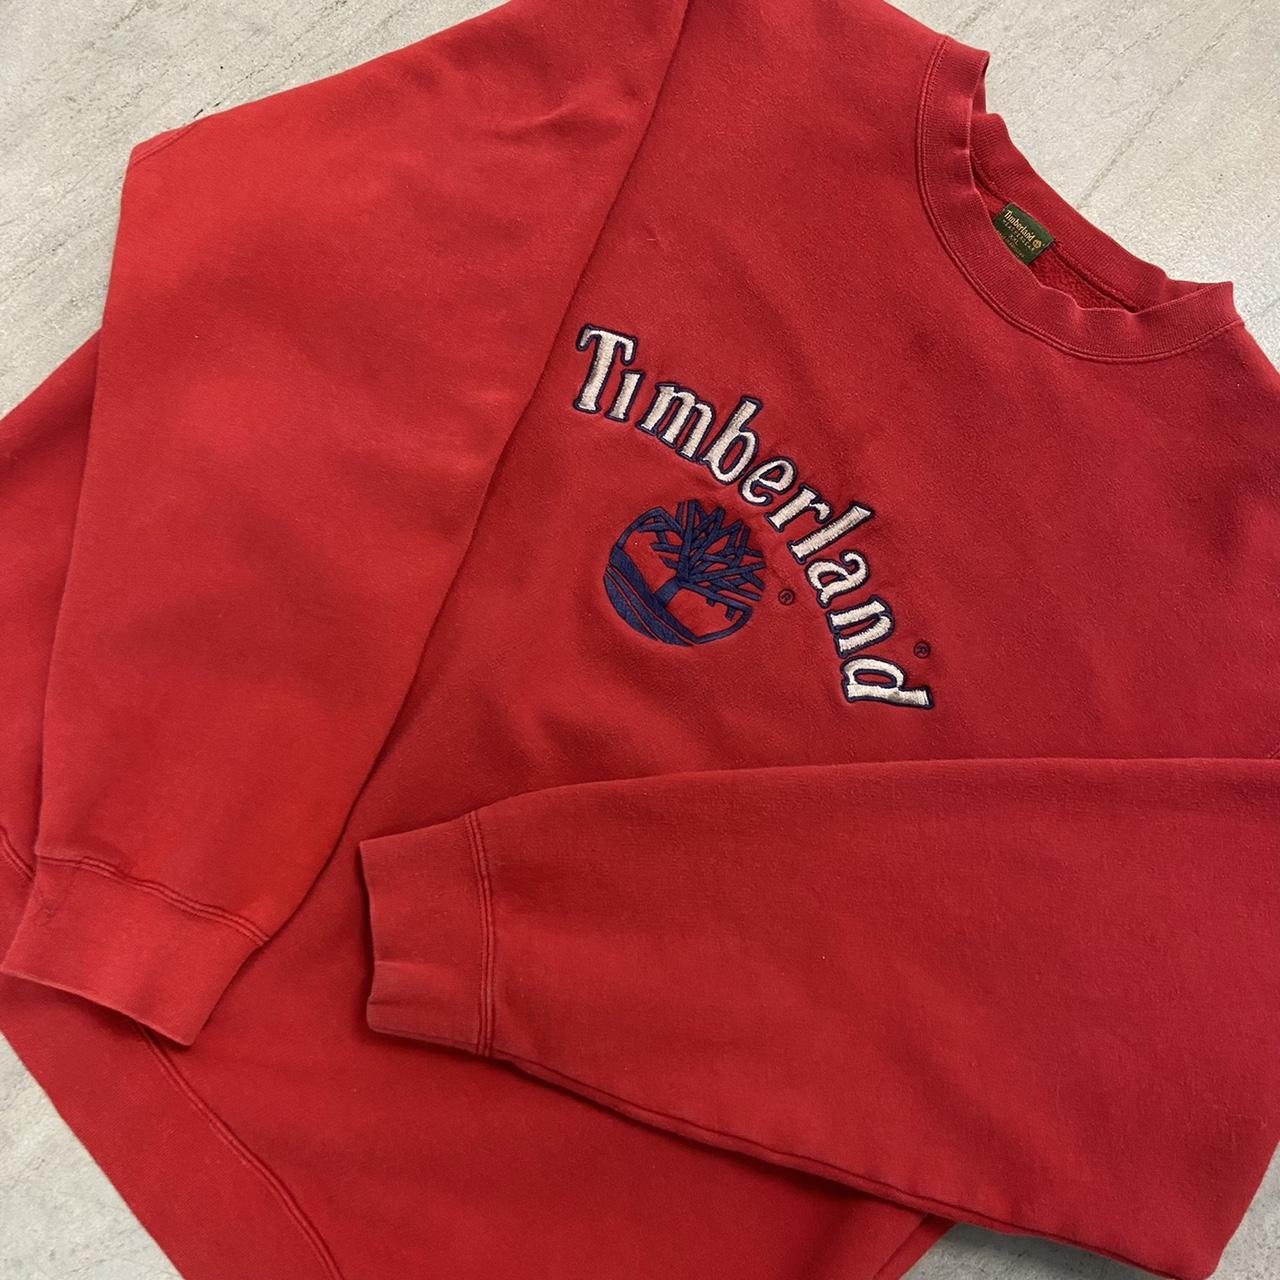 Timberland Men's Red and Navy Sweatshirt